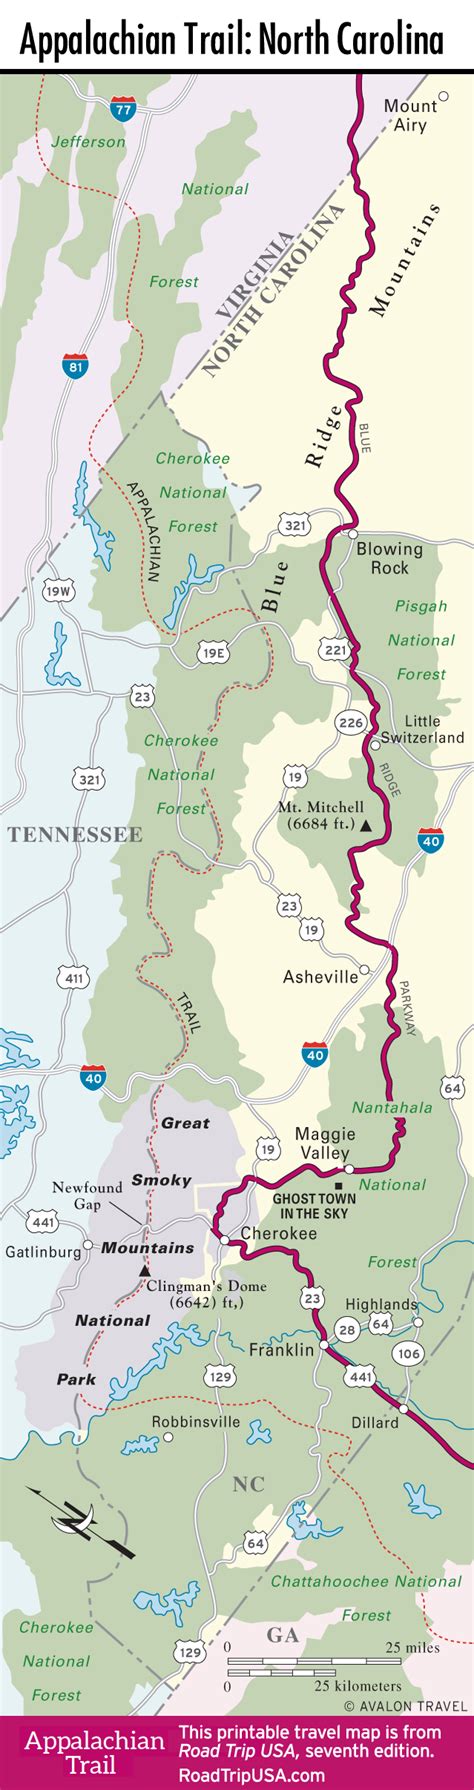 Appalachian Trail Driving Route Road Trip Usa